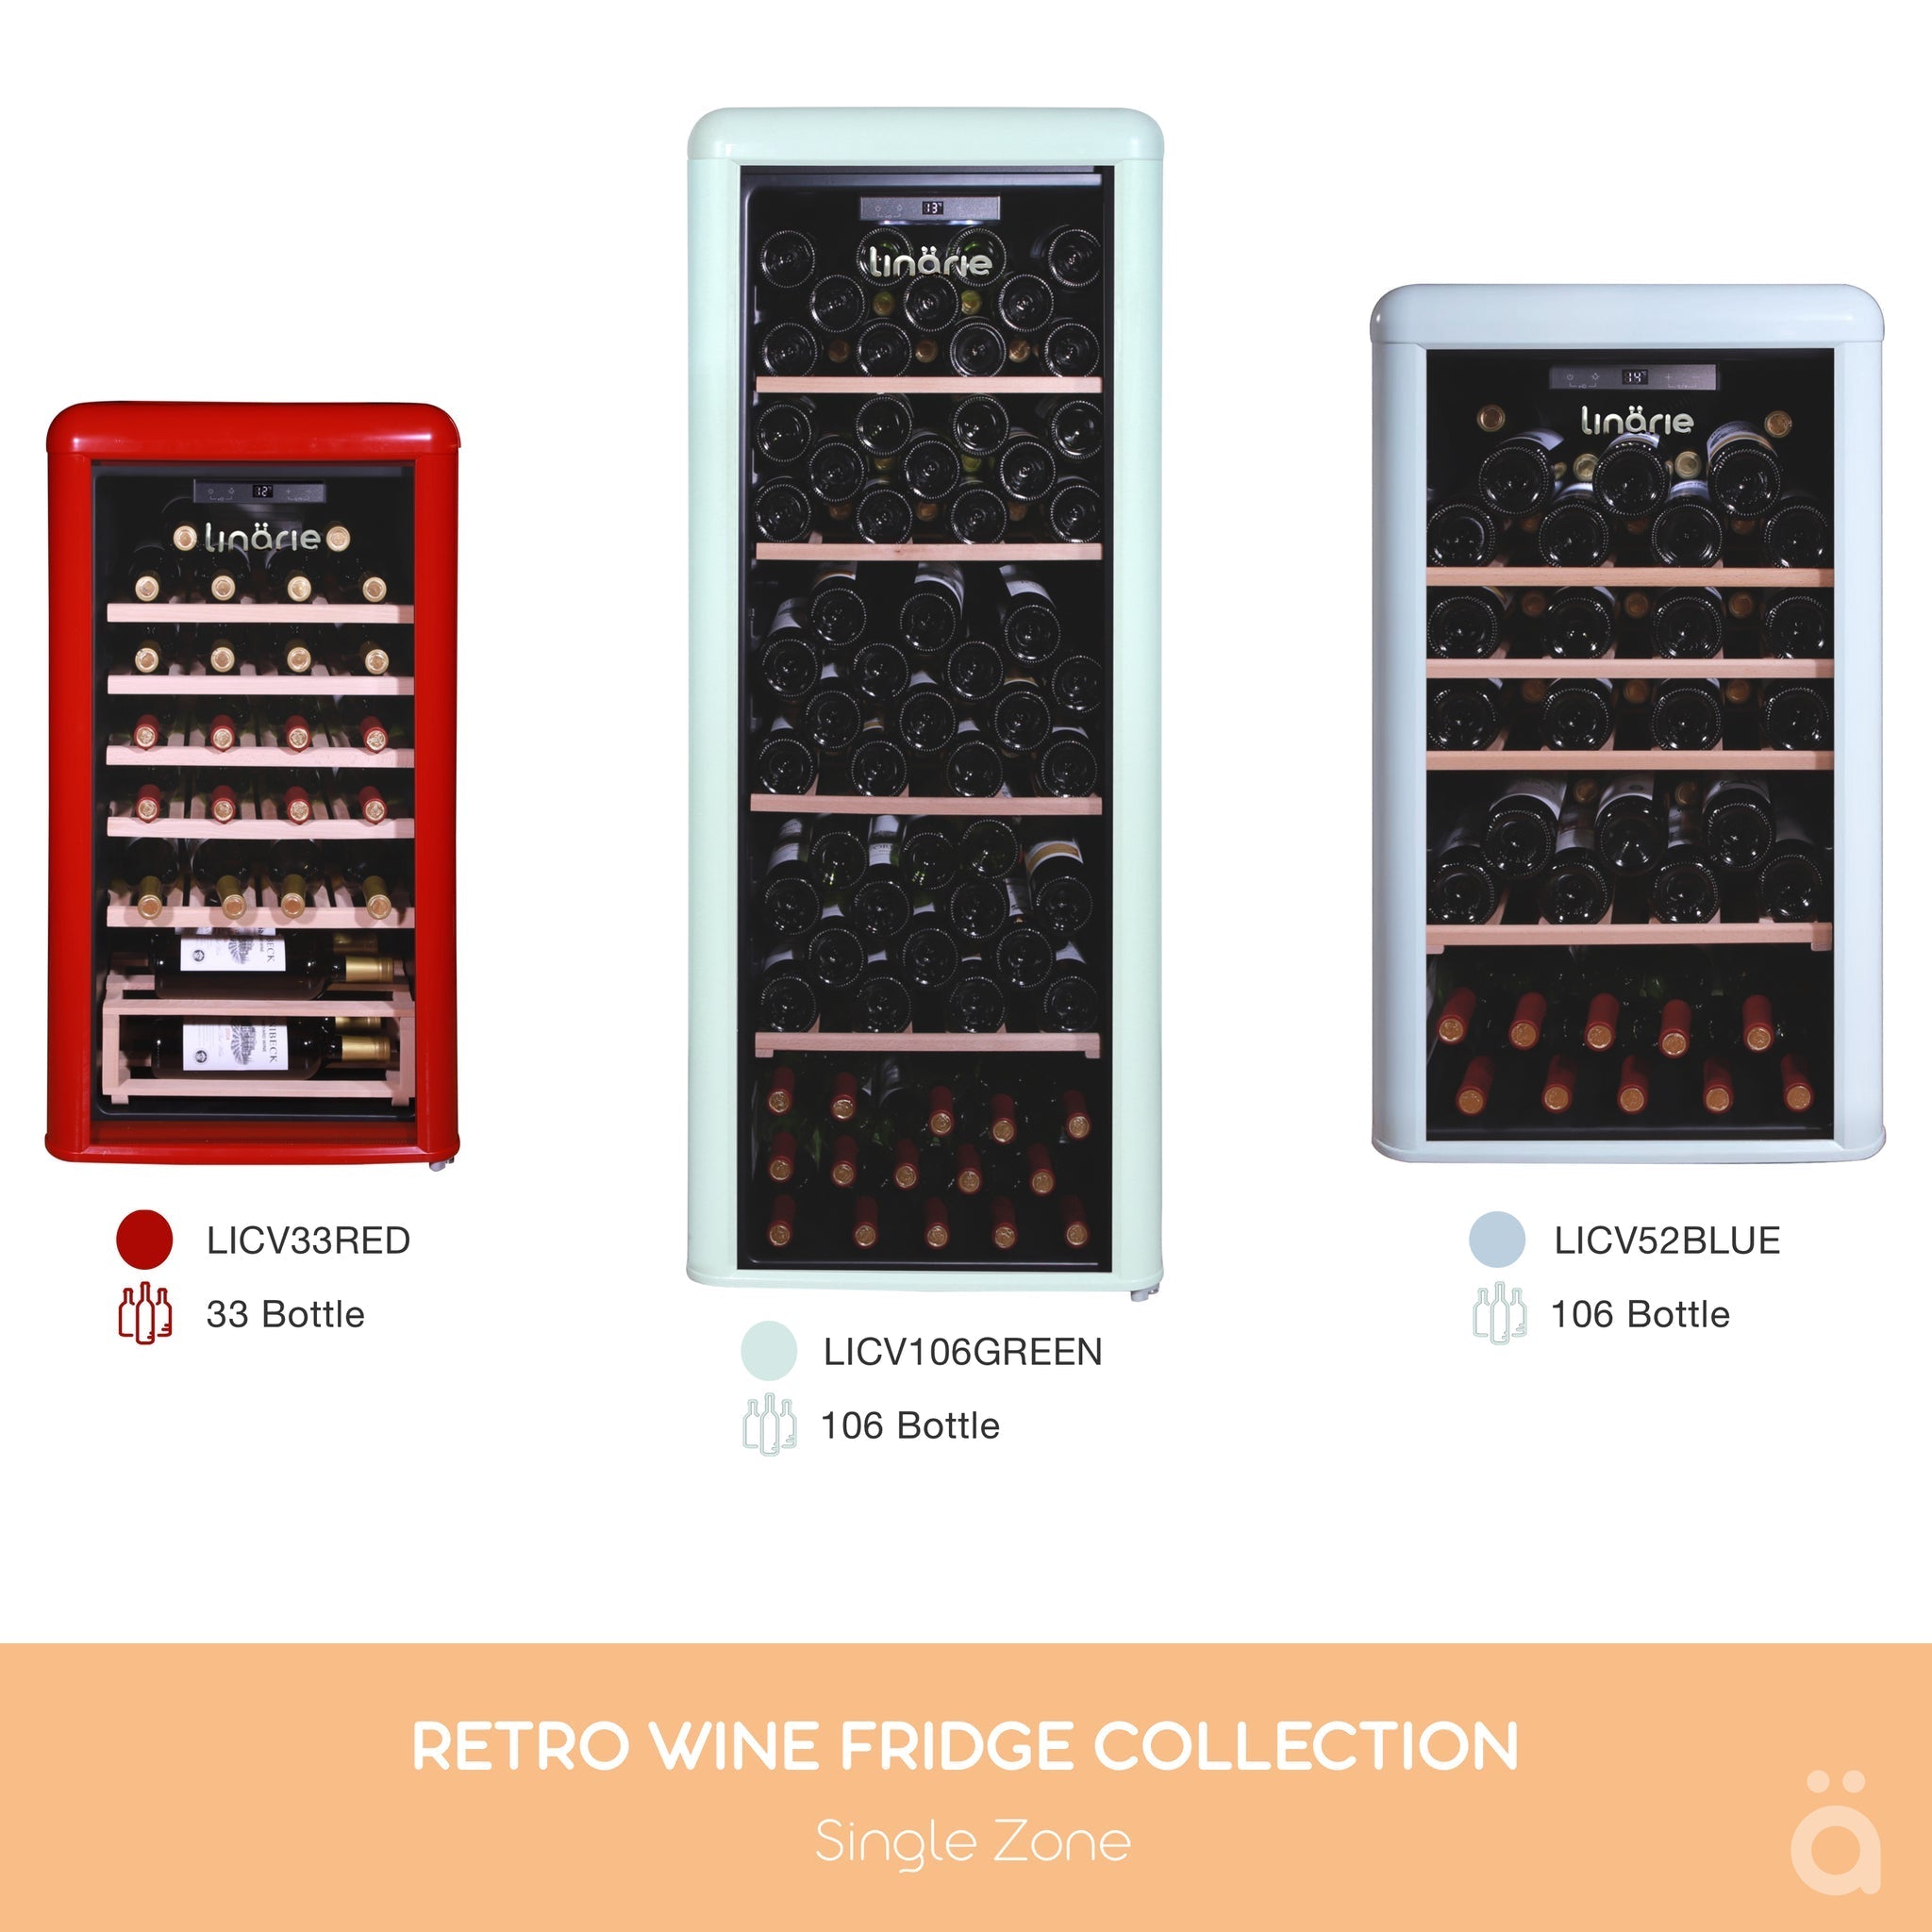 Retro wine fridge size reference guide